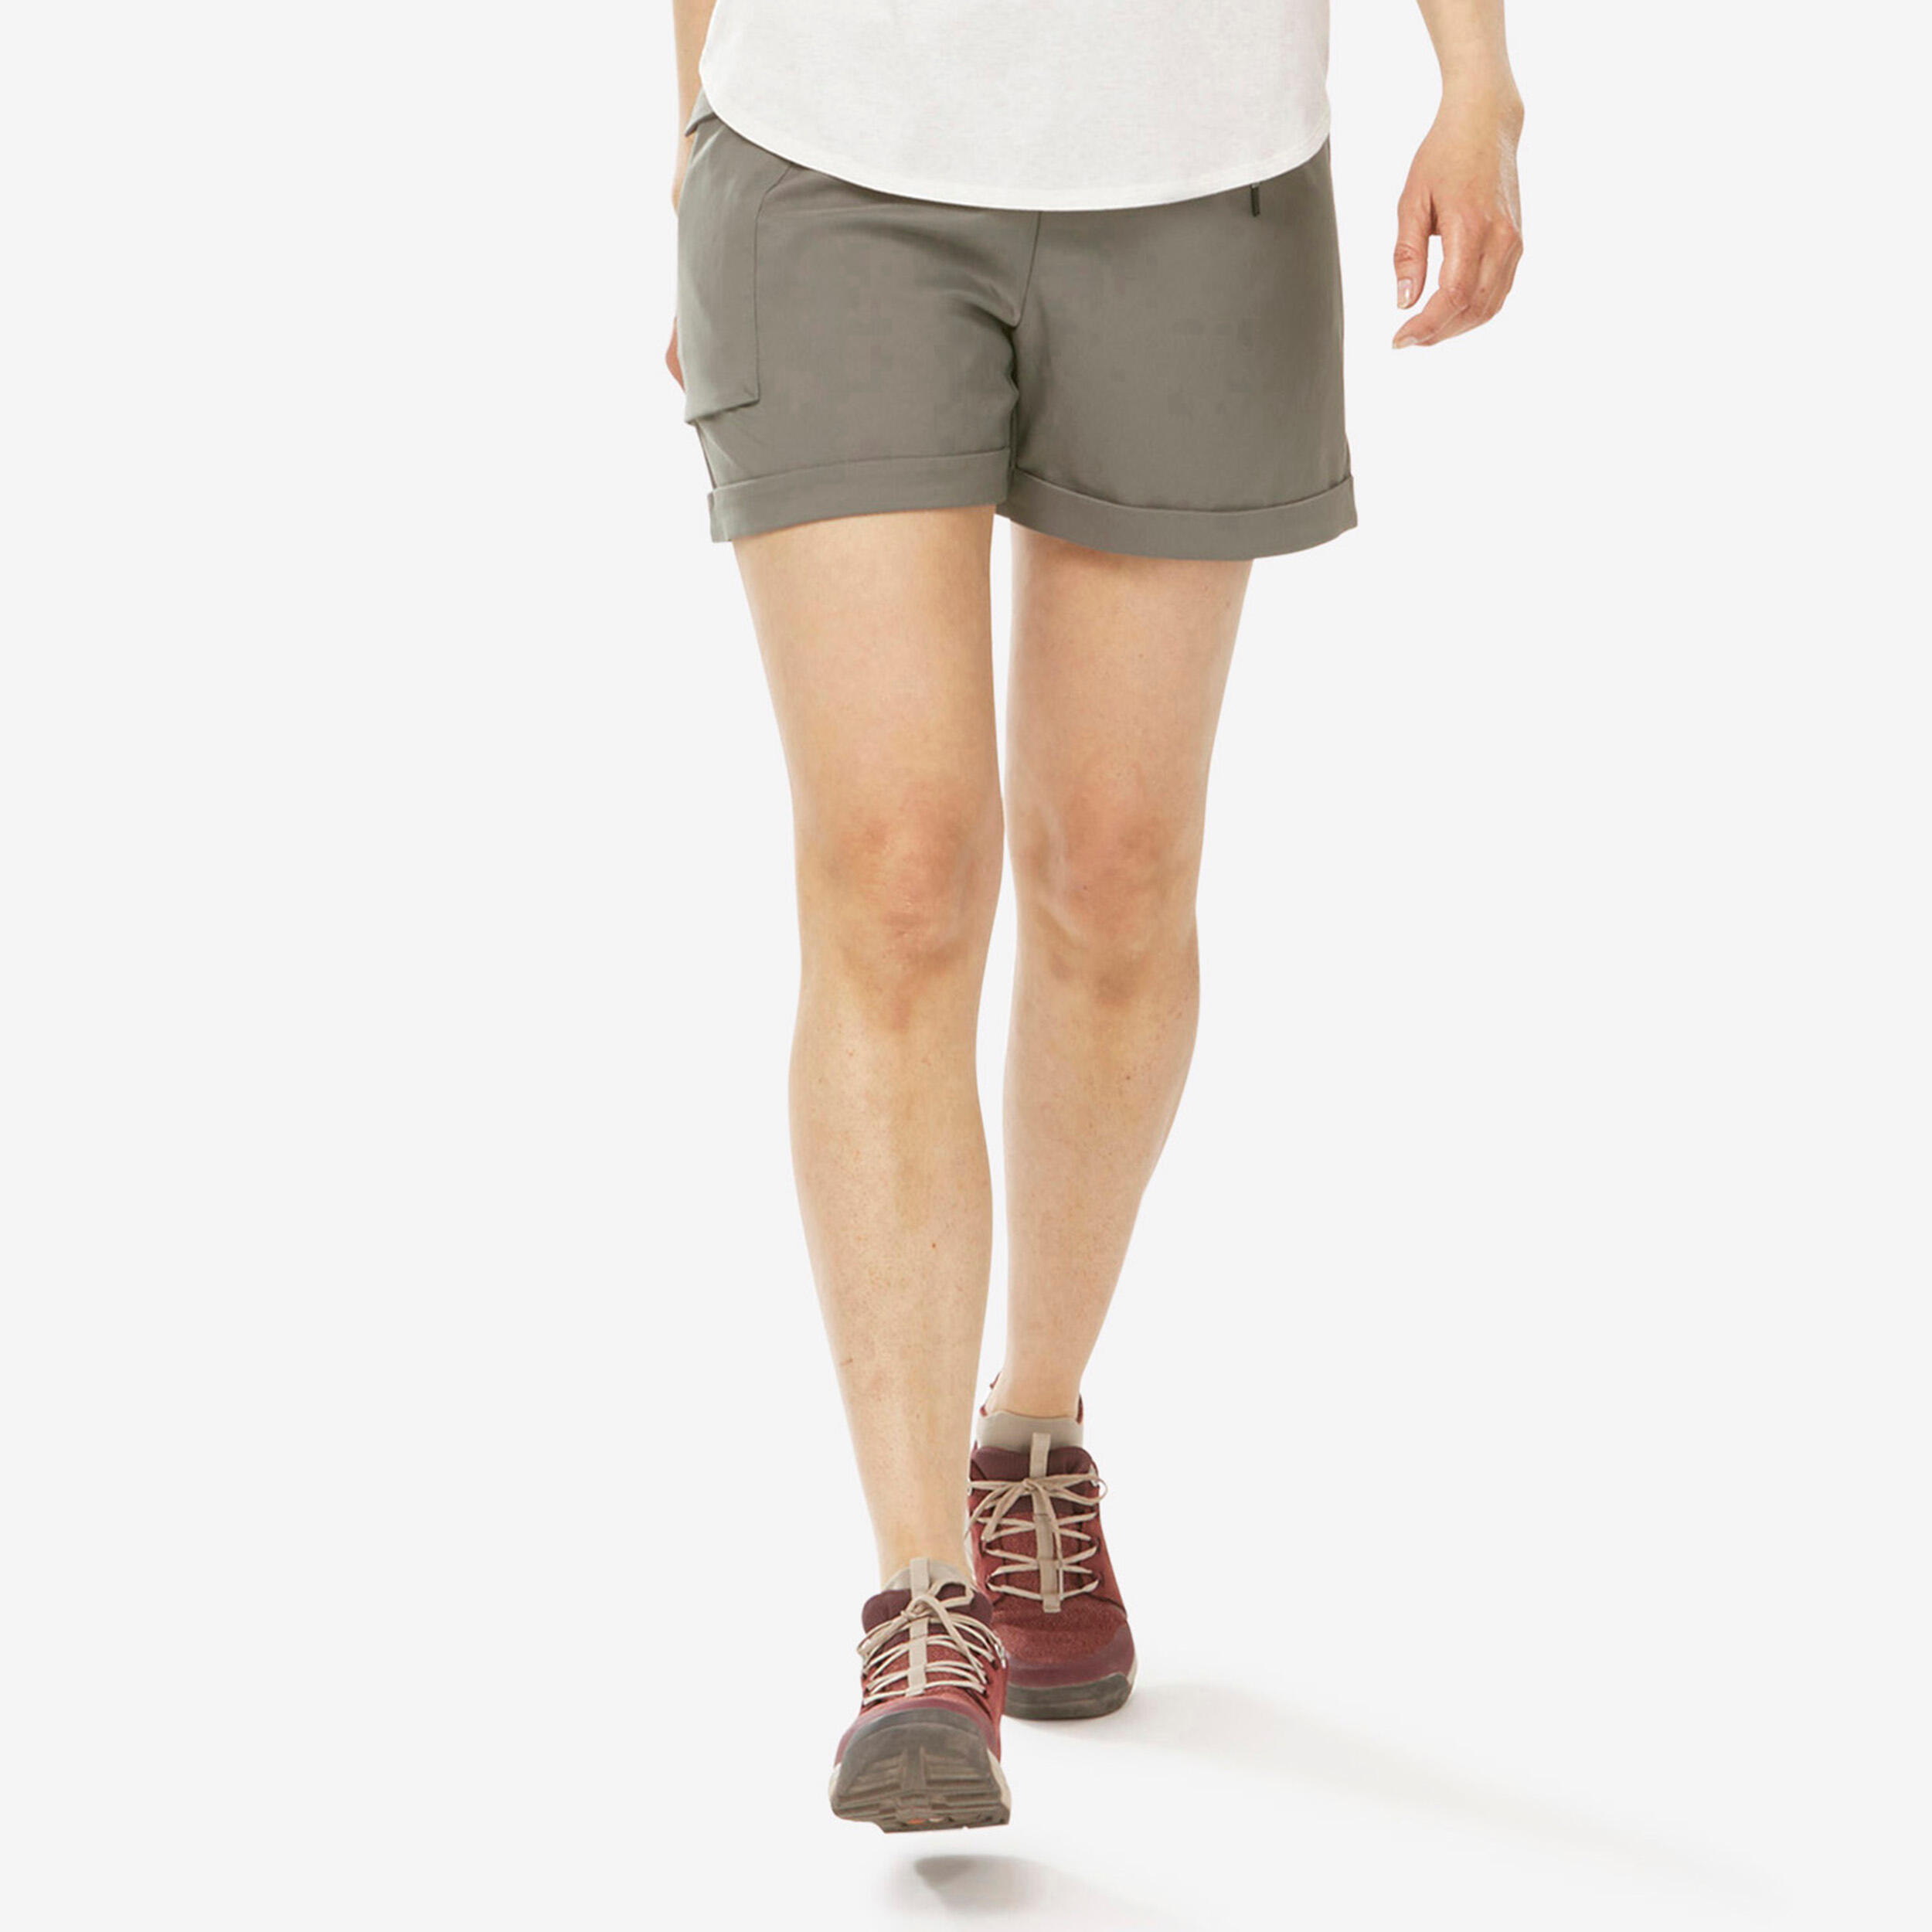 NH500 Regular Women's Country Walking Shorts - Khaki 2/8